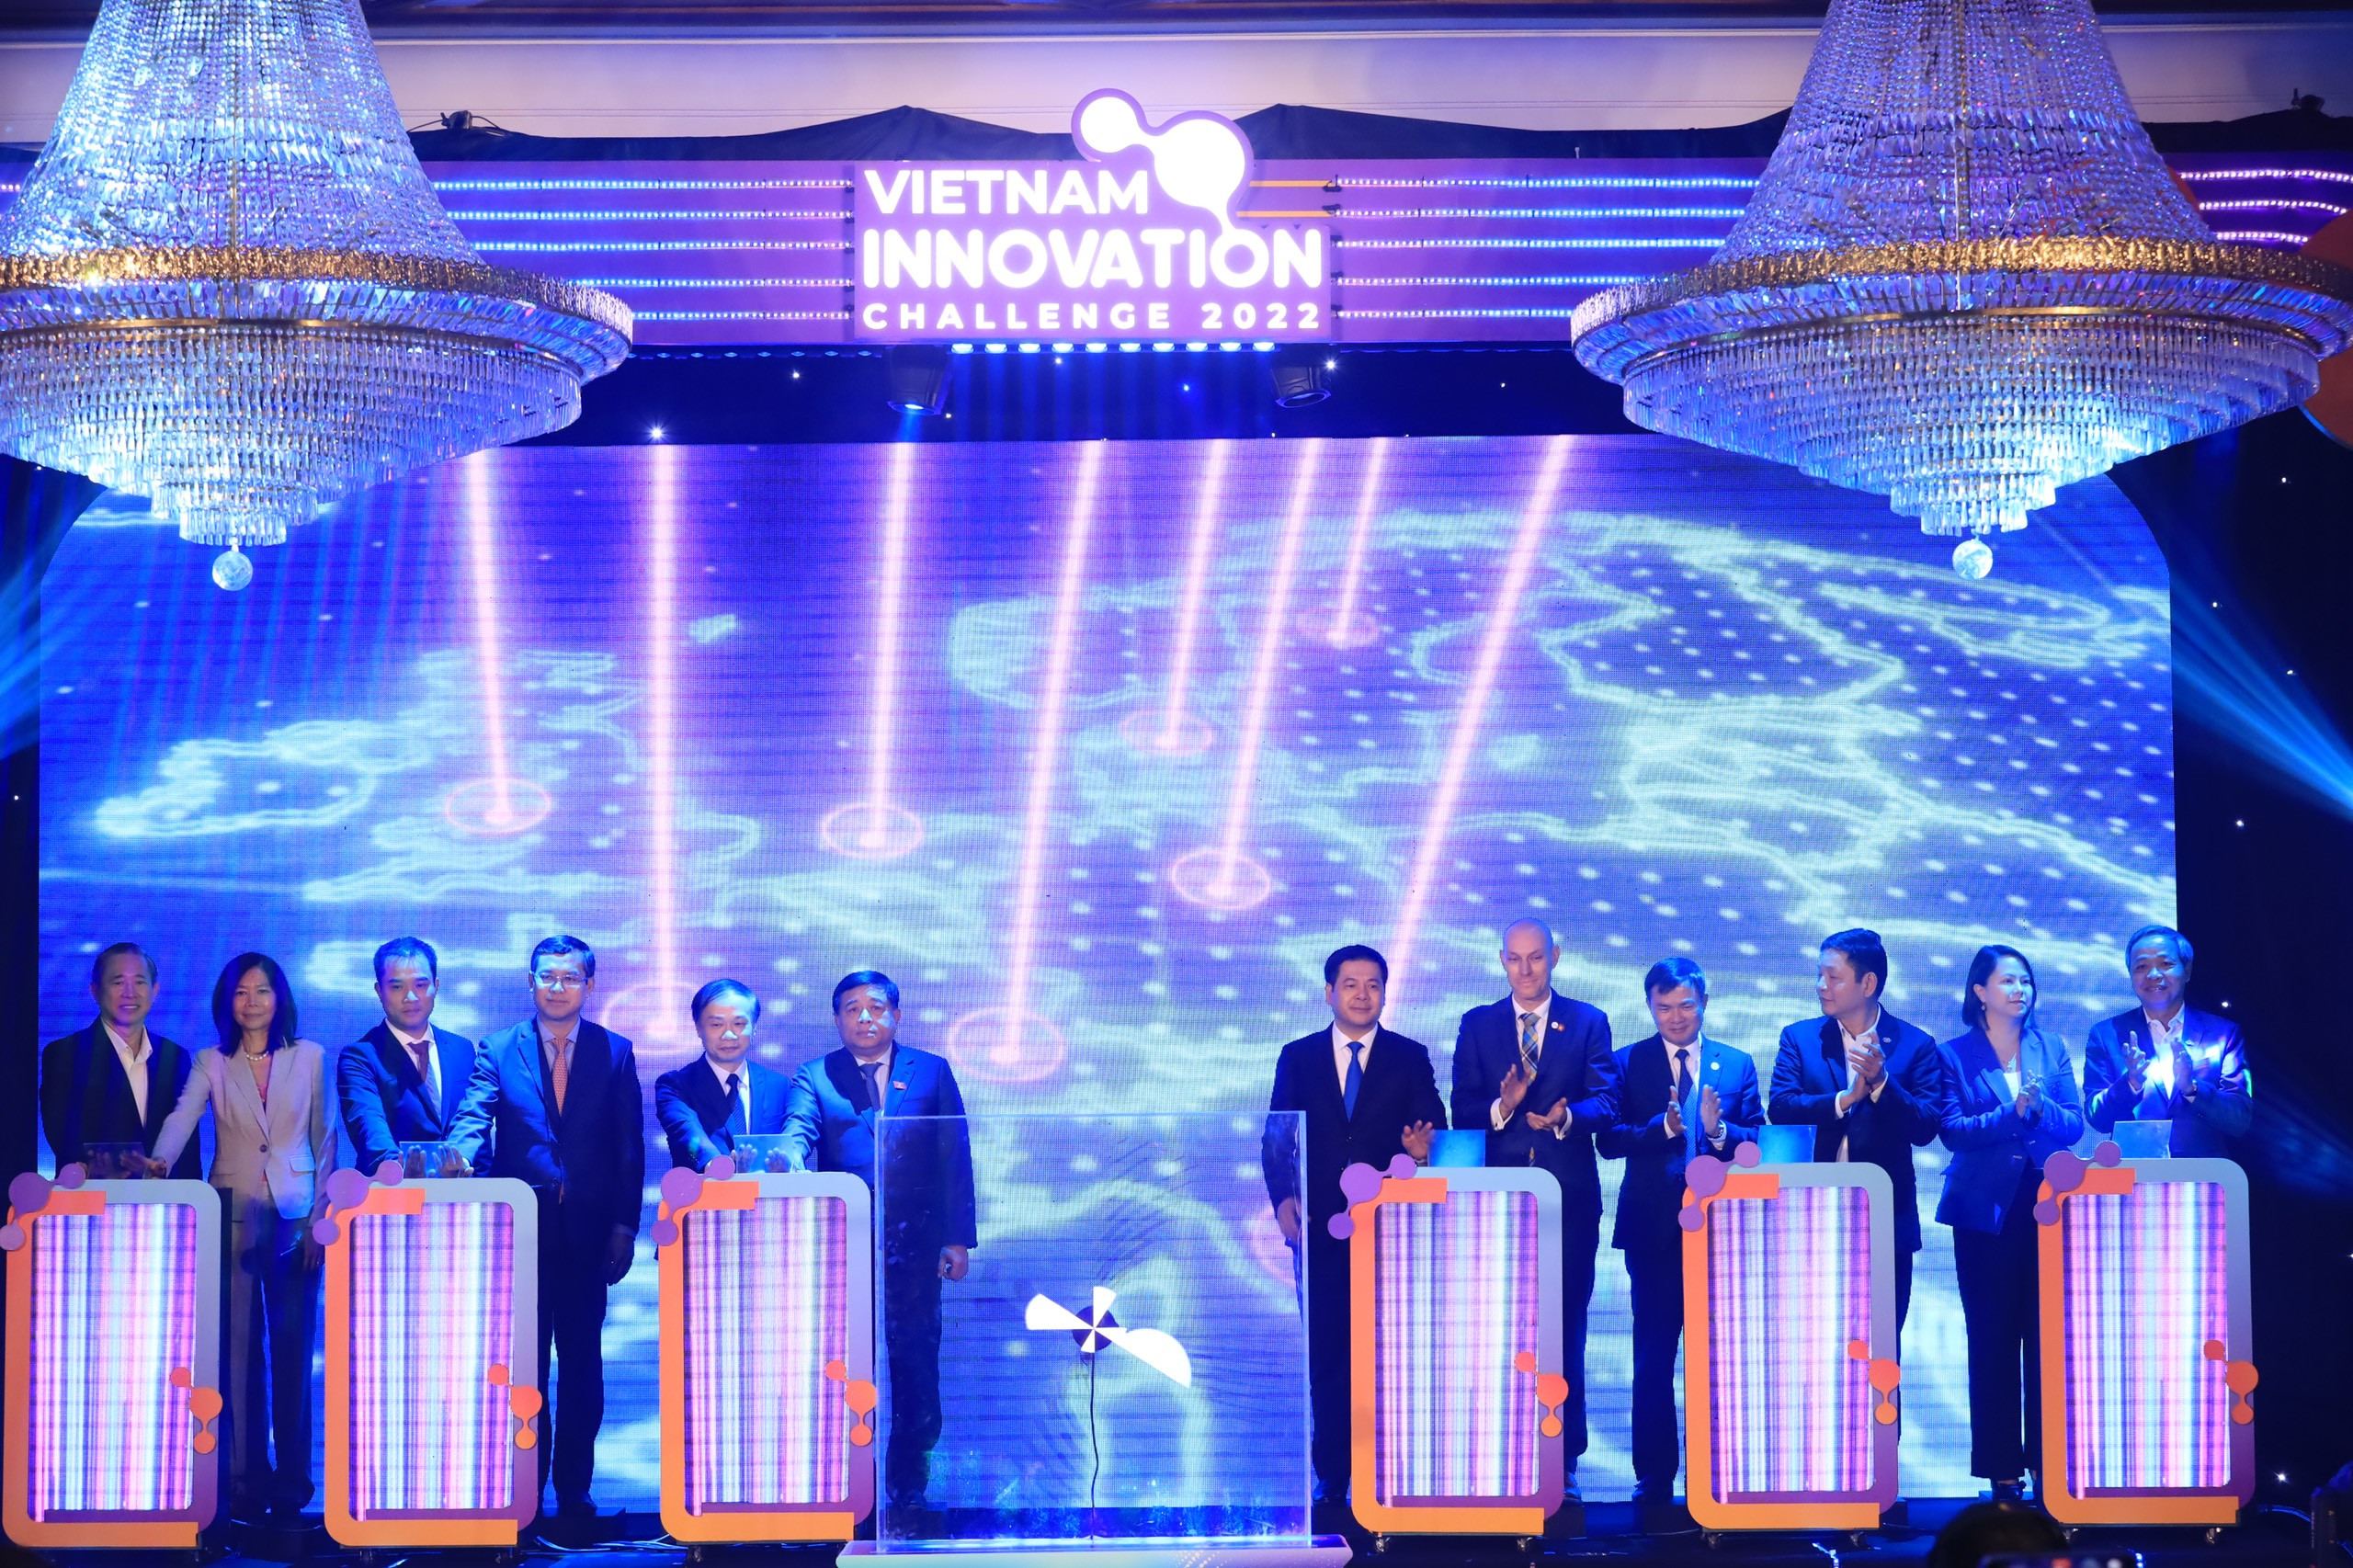 CMC commits to accompanying Vietnam Innovation Challenge 2022